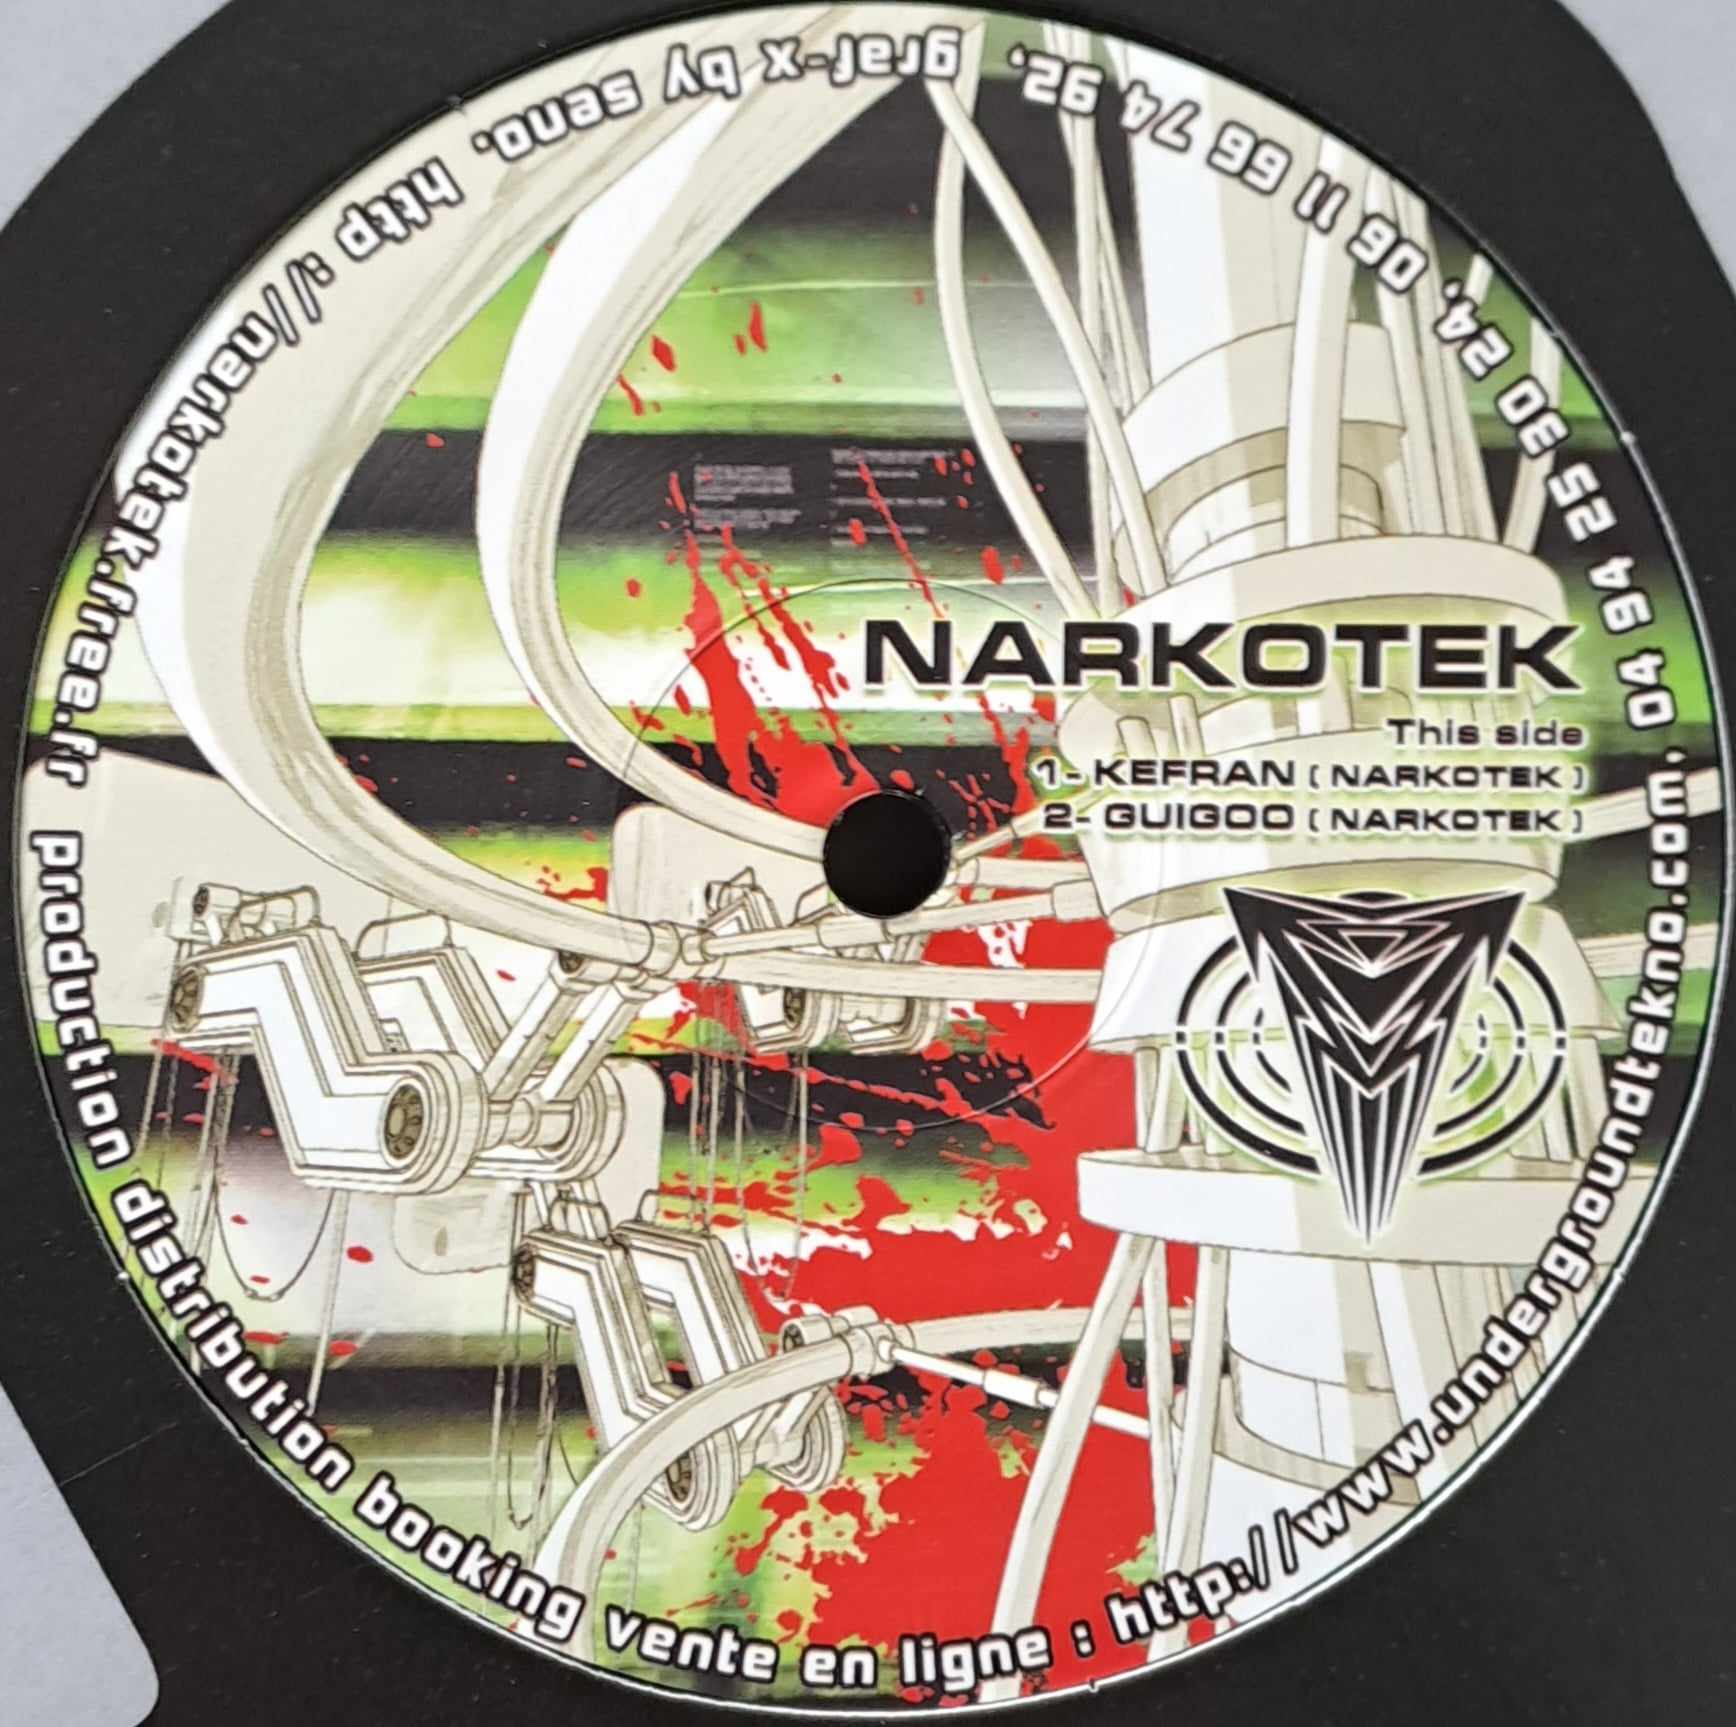 LSDF Vs Narkotek (RP2023) (dernières copies en stock) - vinyle freetekno